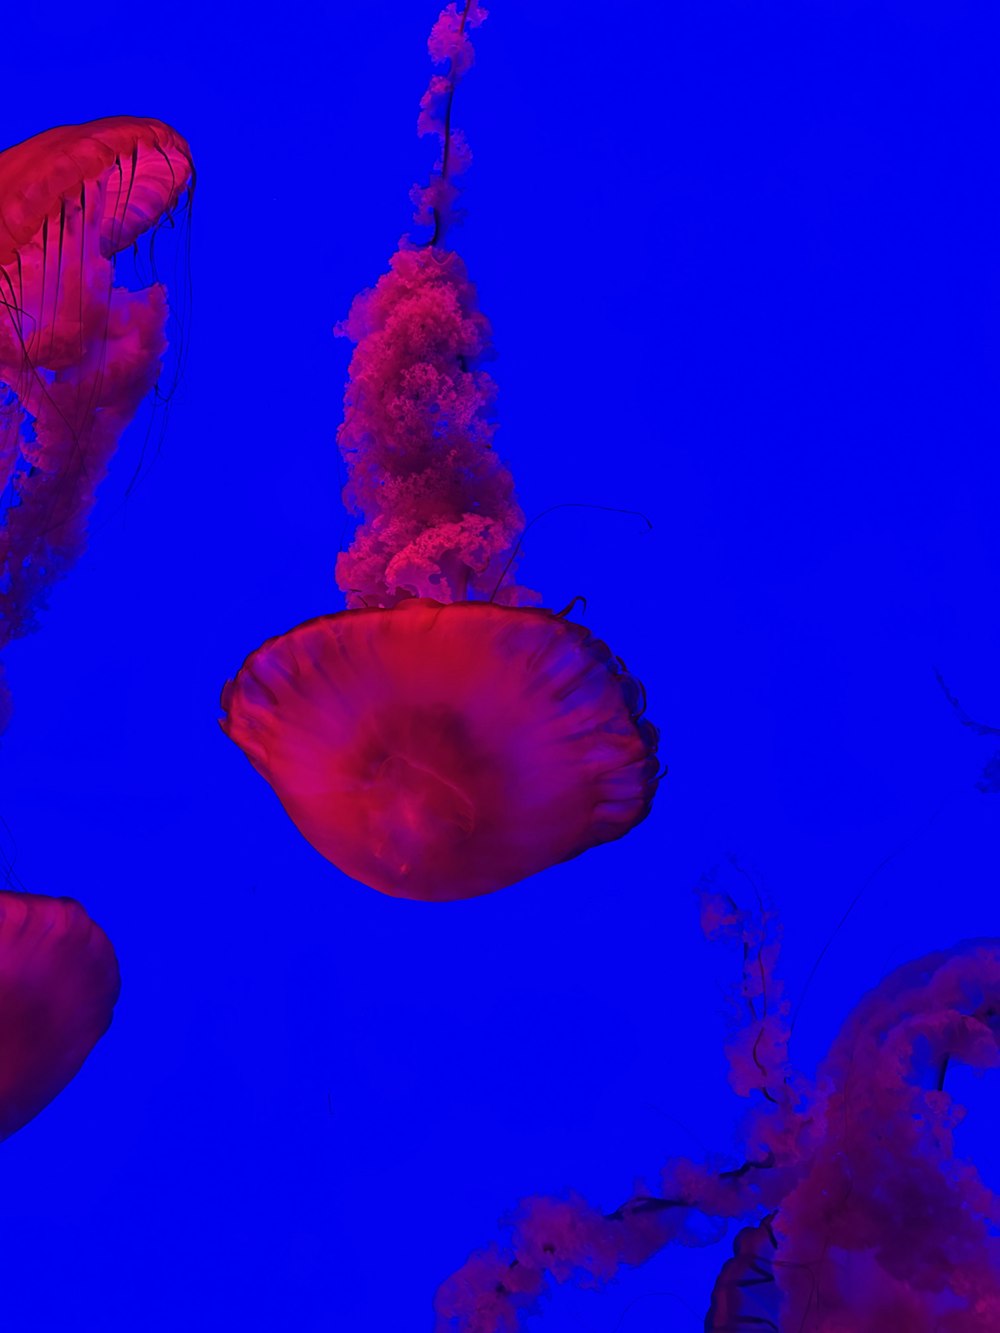 Un grupo de medusas flotando en el agua